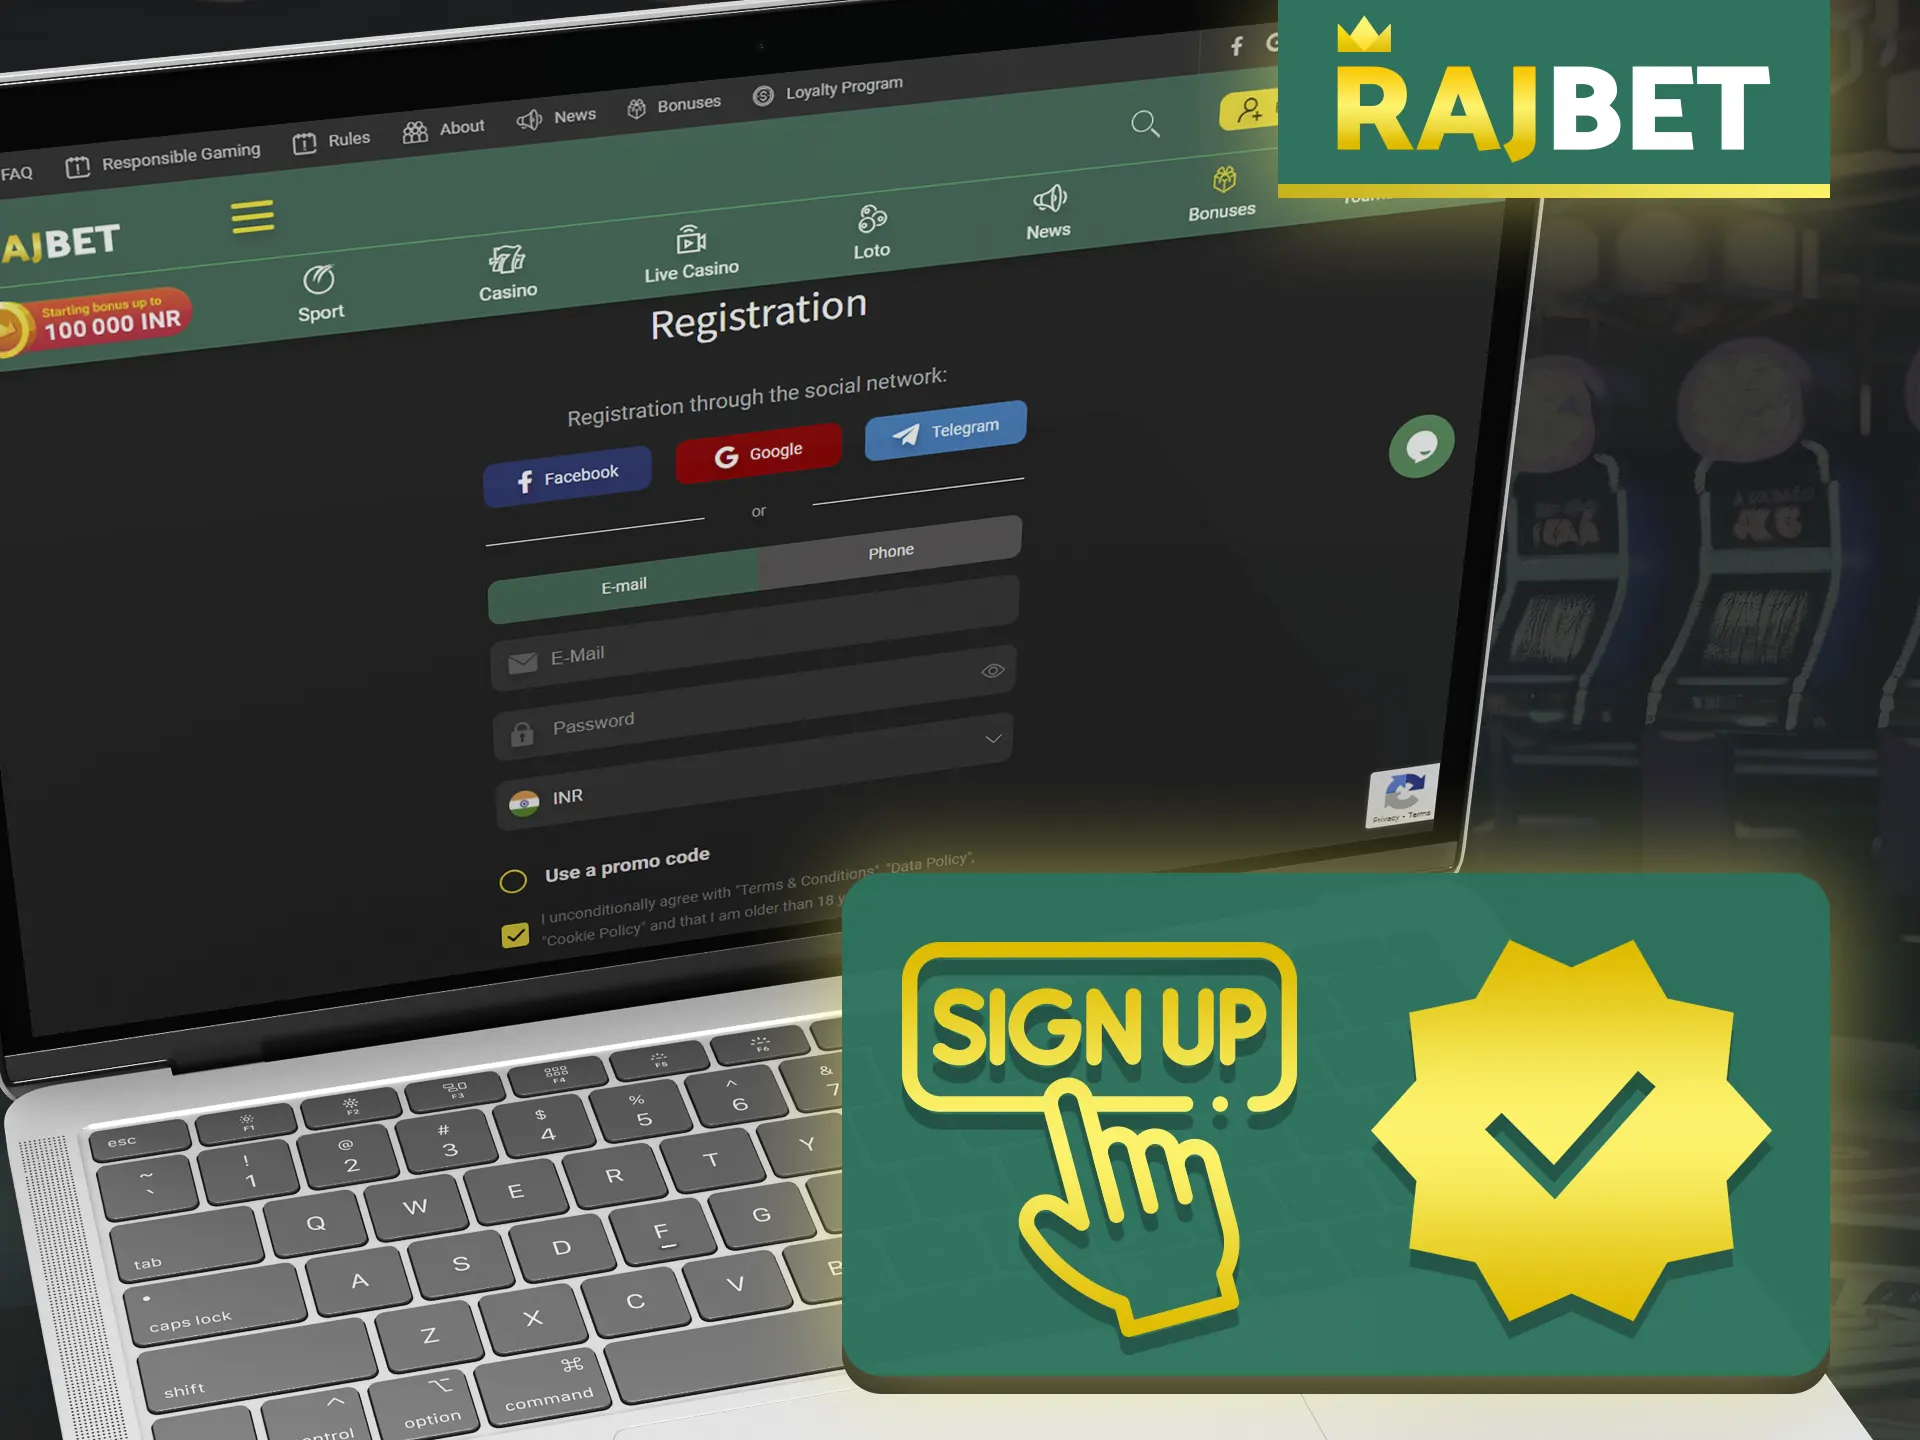 Go through registration and verification on Rajbet's website.